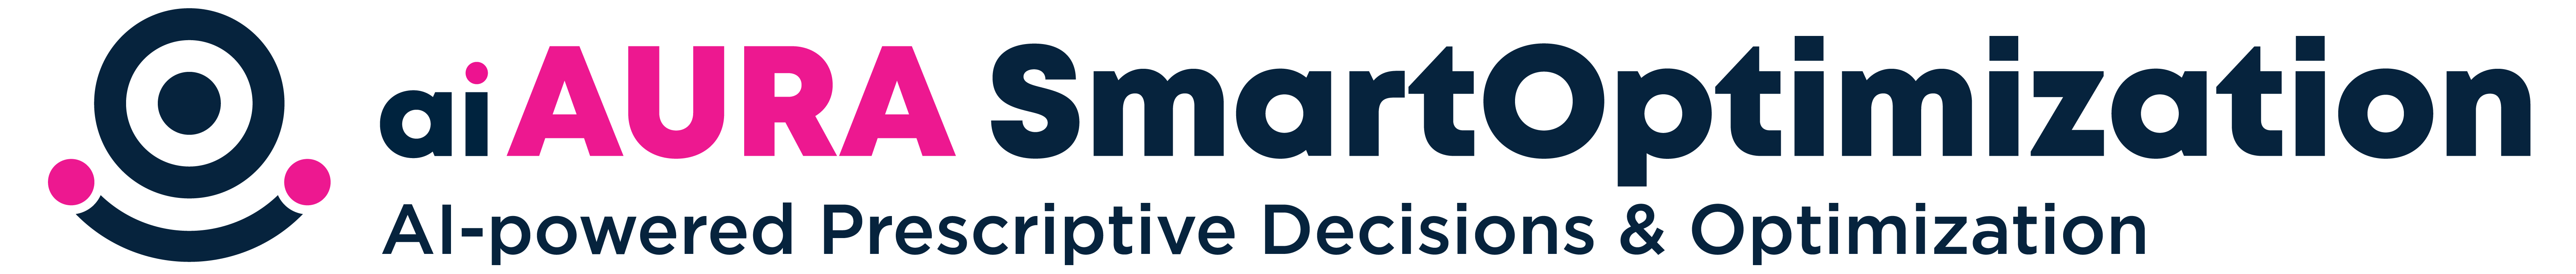 SmartOptimization logo